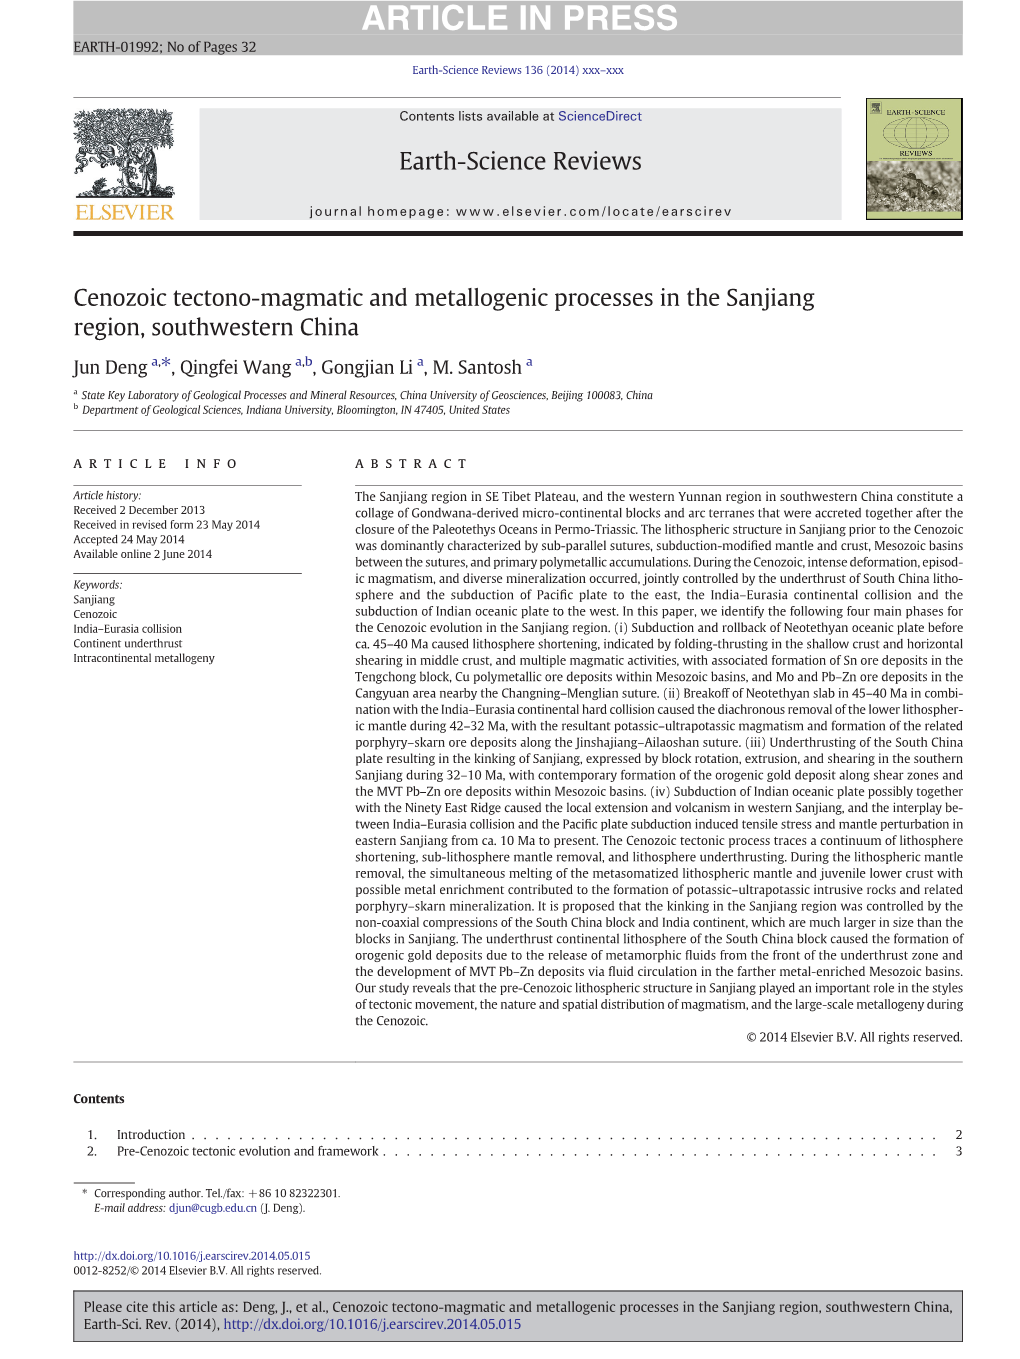 Cenozoic Tectono-Magmatic and Metallogenic Processes in the Sanjiang Region, Southwestern China